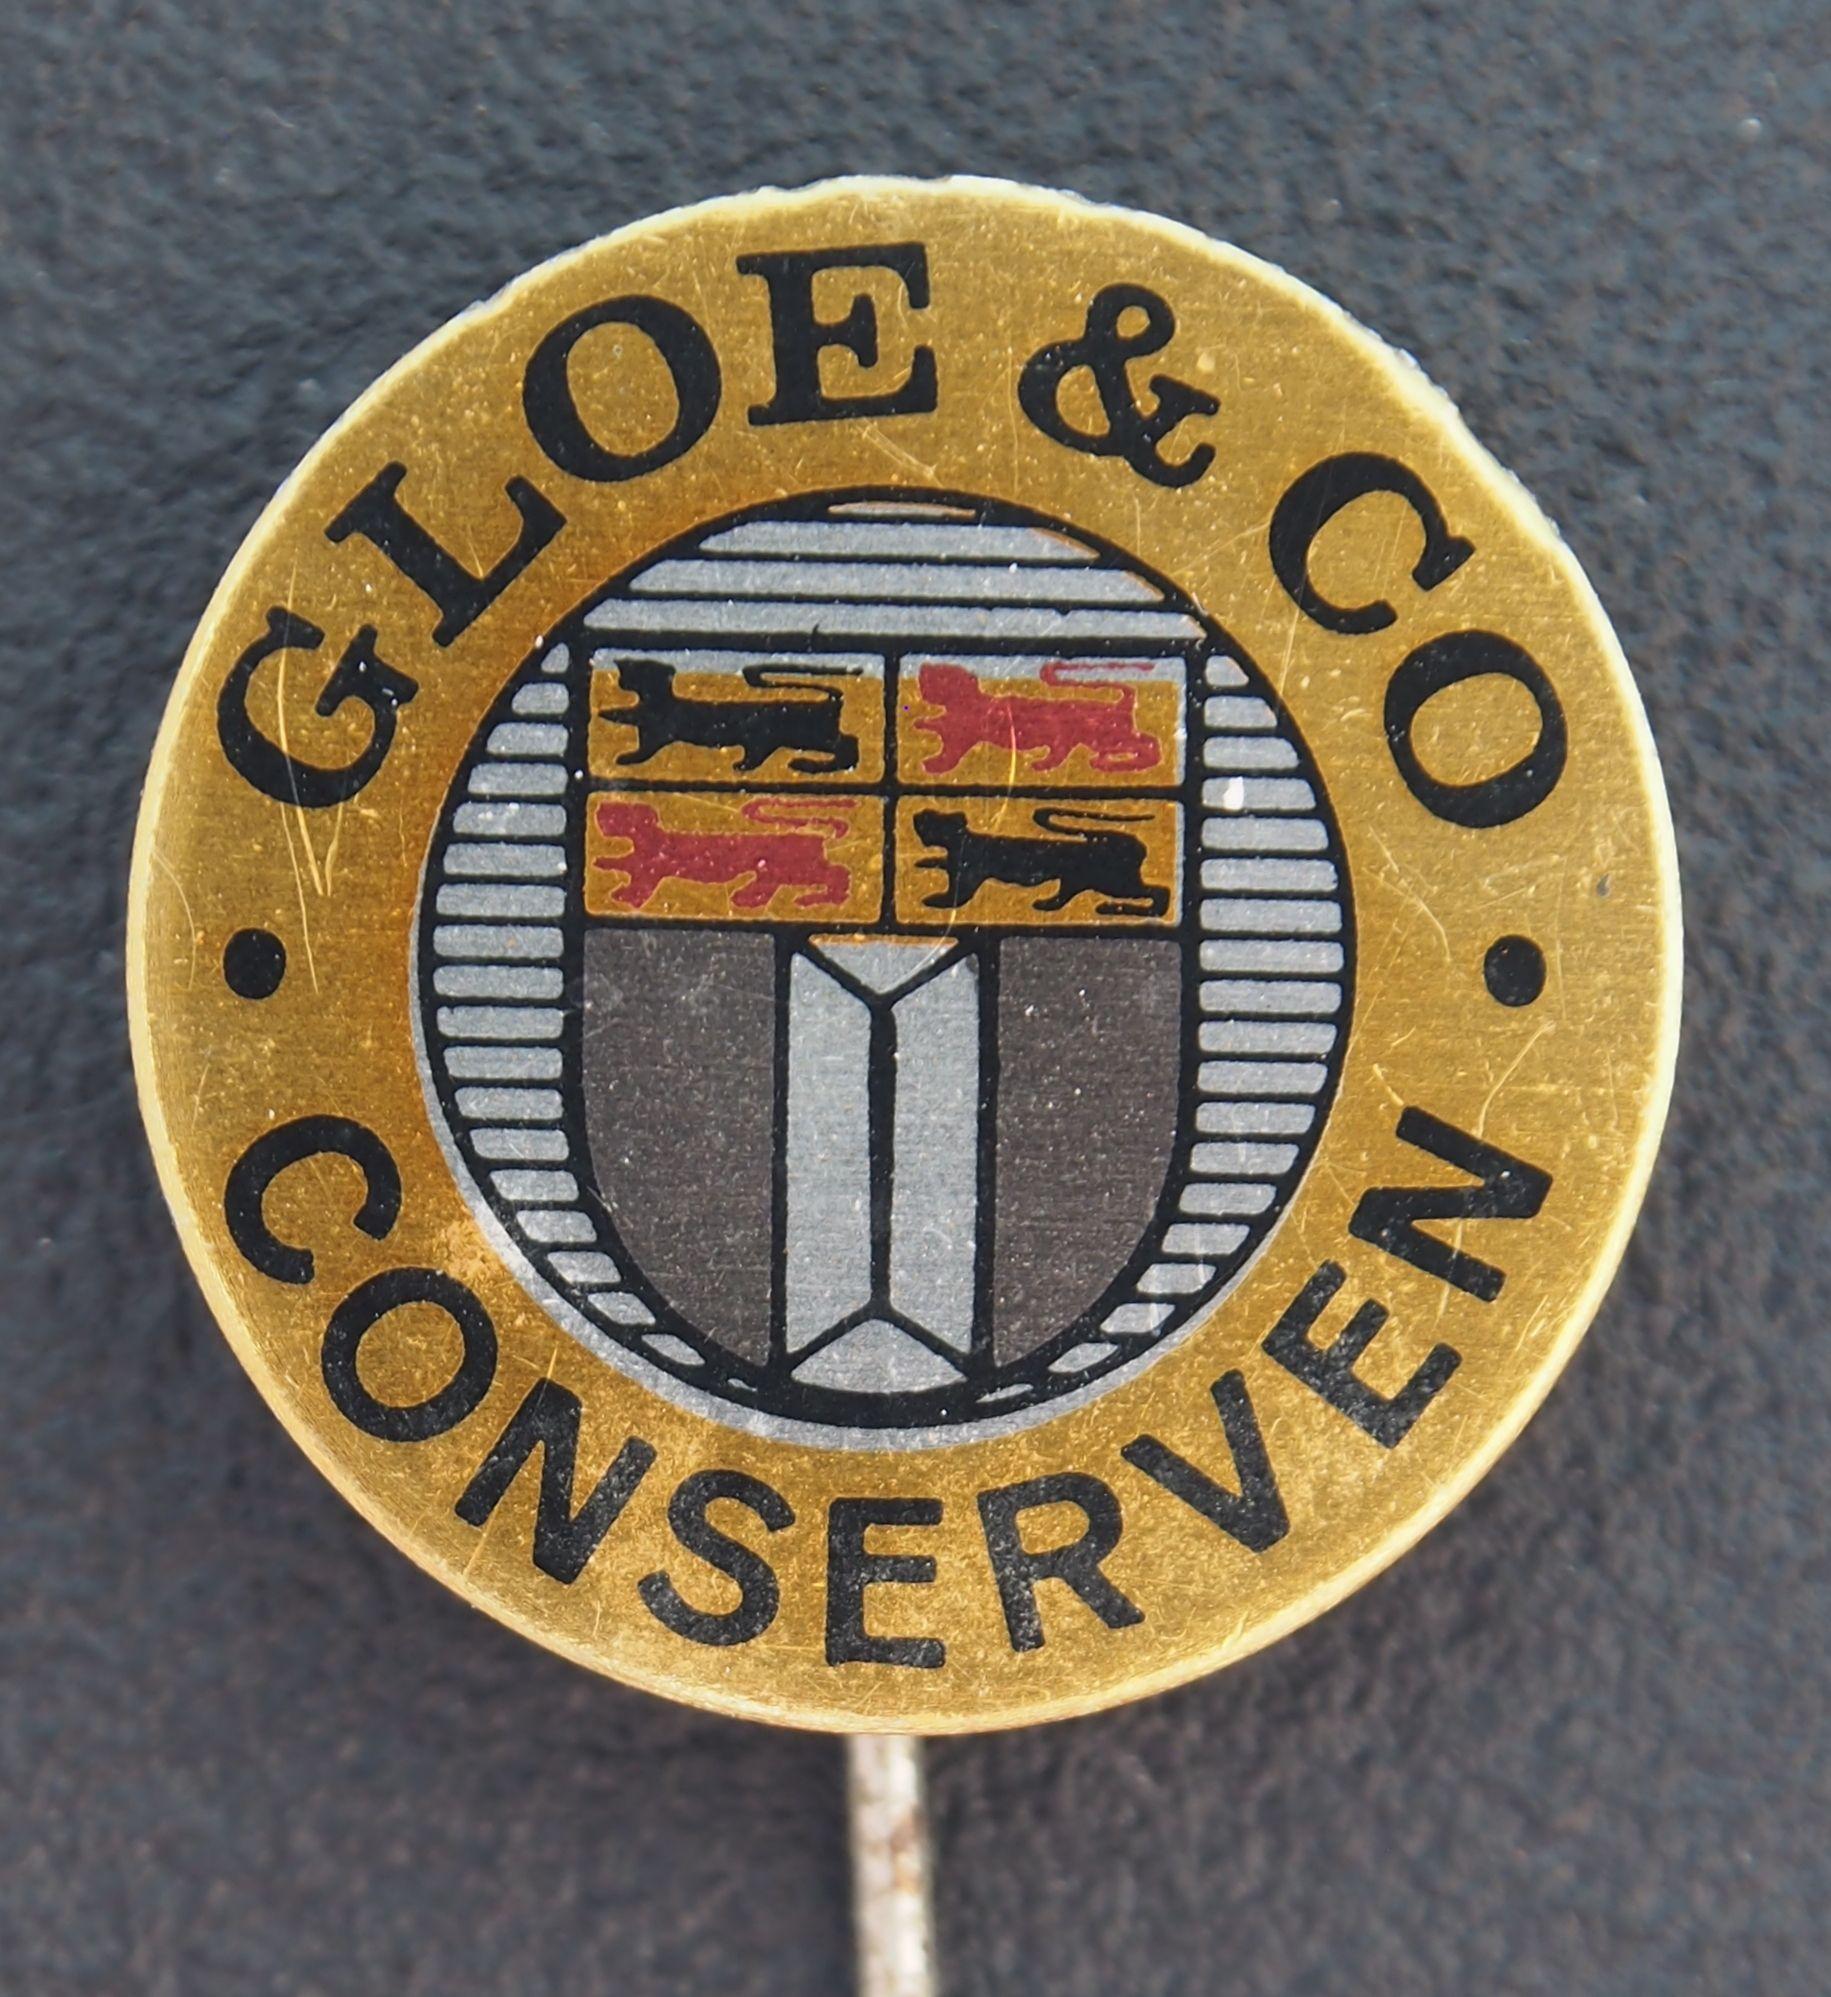 Gloe Logo - File:Gloe & Co conserven reclamespeldje.JPG - Wikimedia Commons